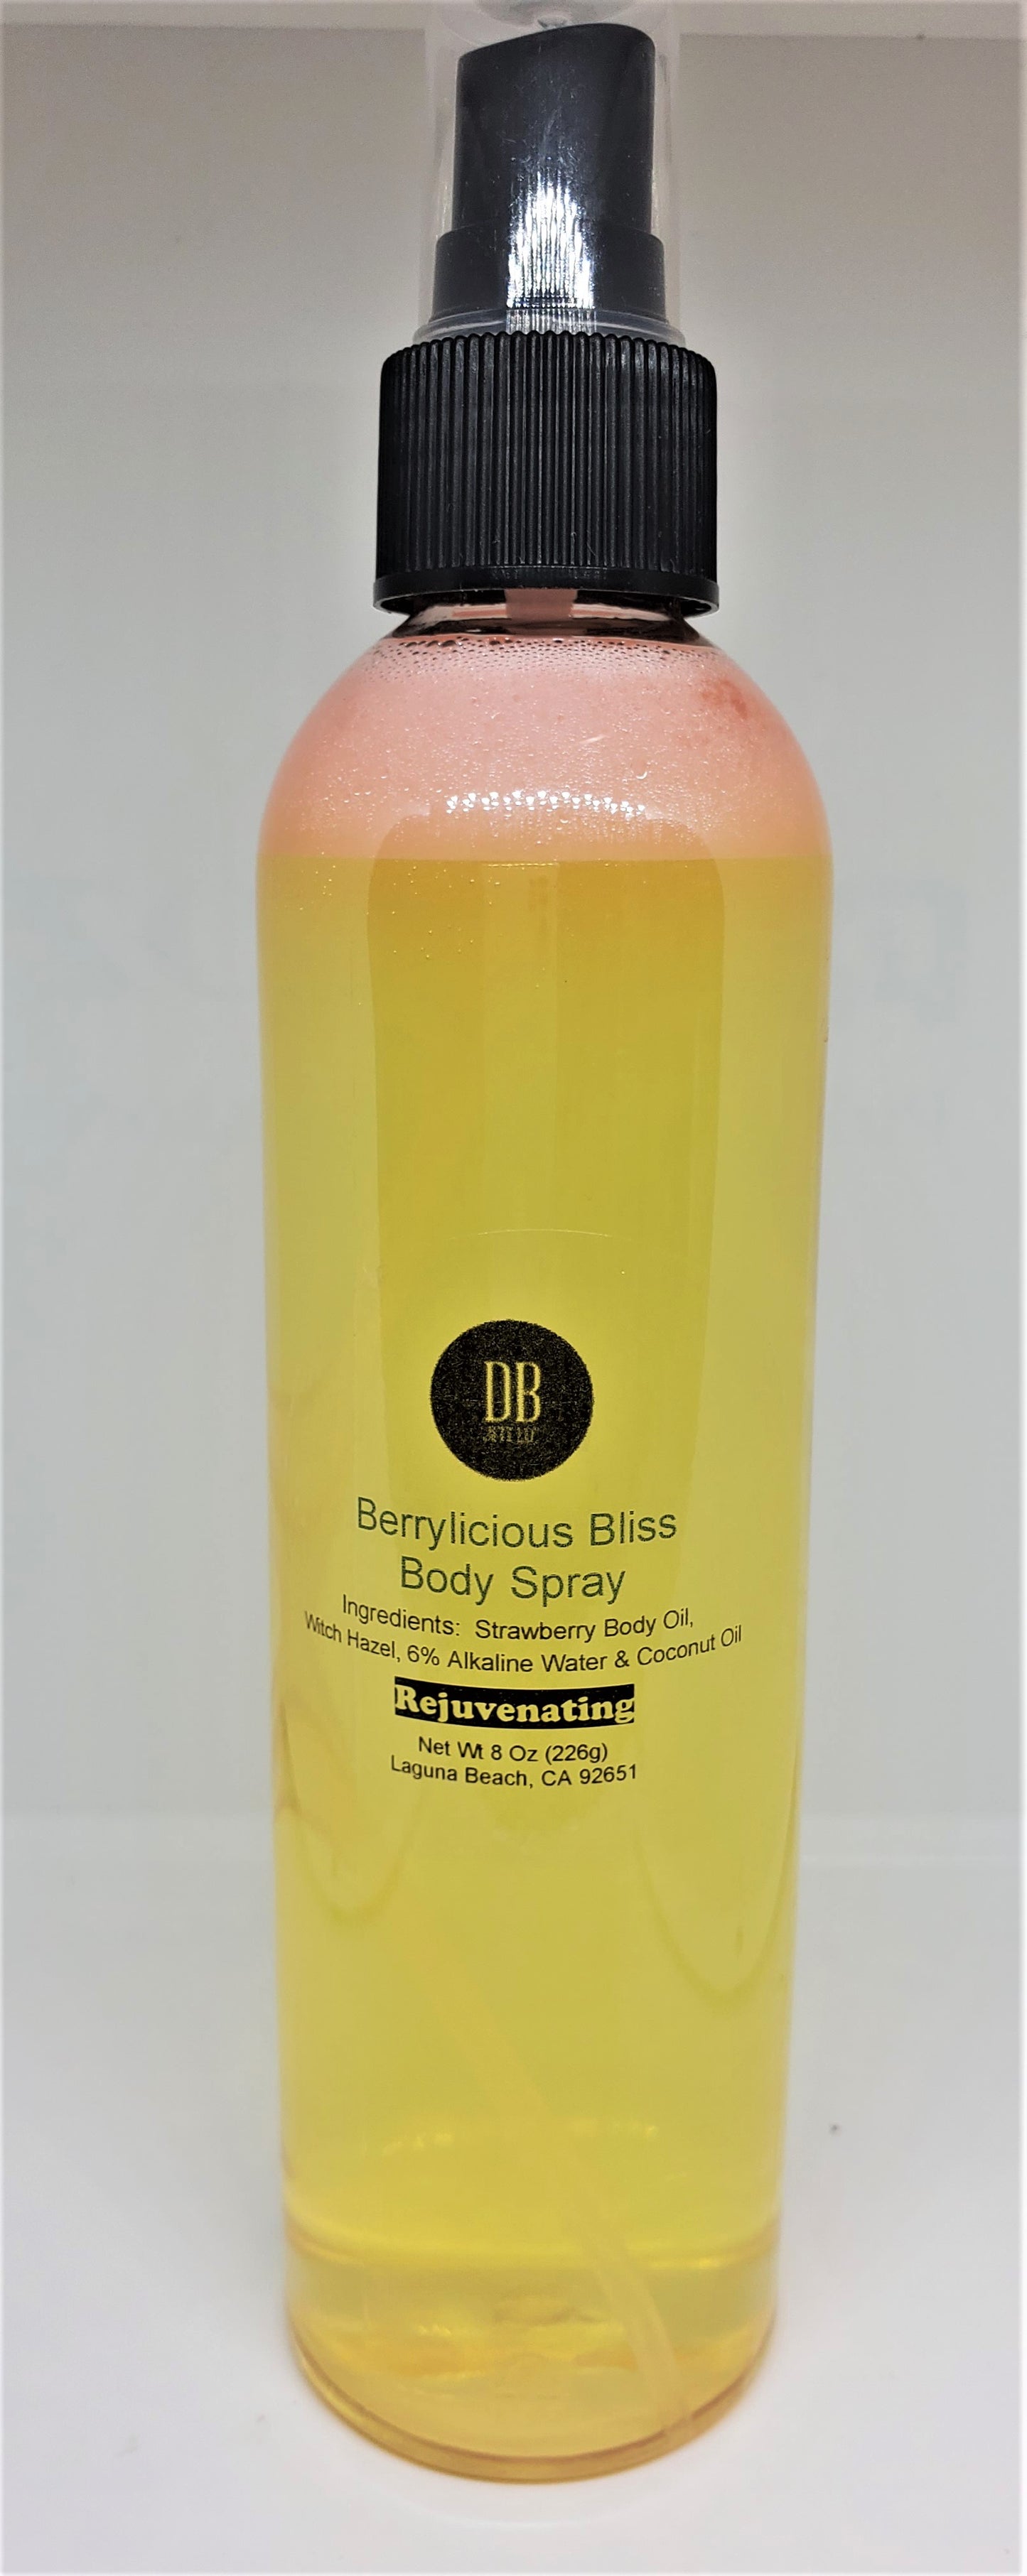 DB Jett - Berrylicious Bliss Body Spray